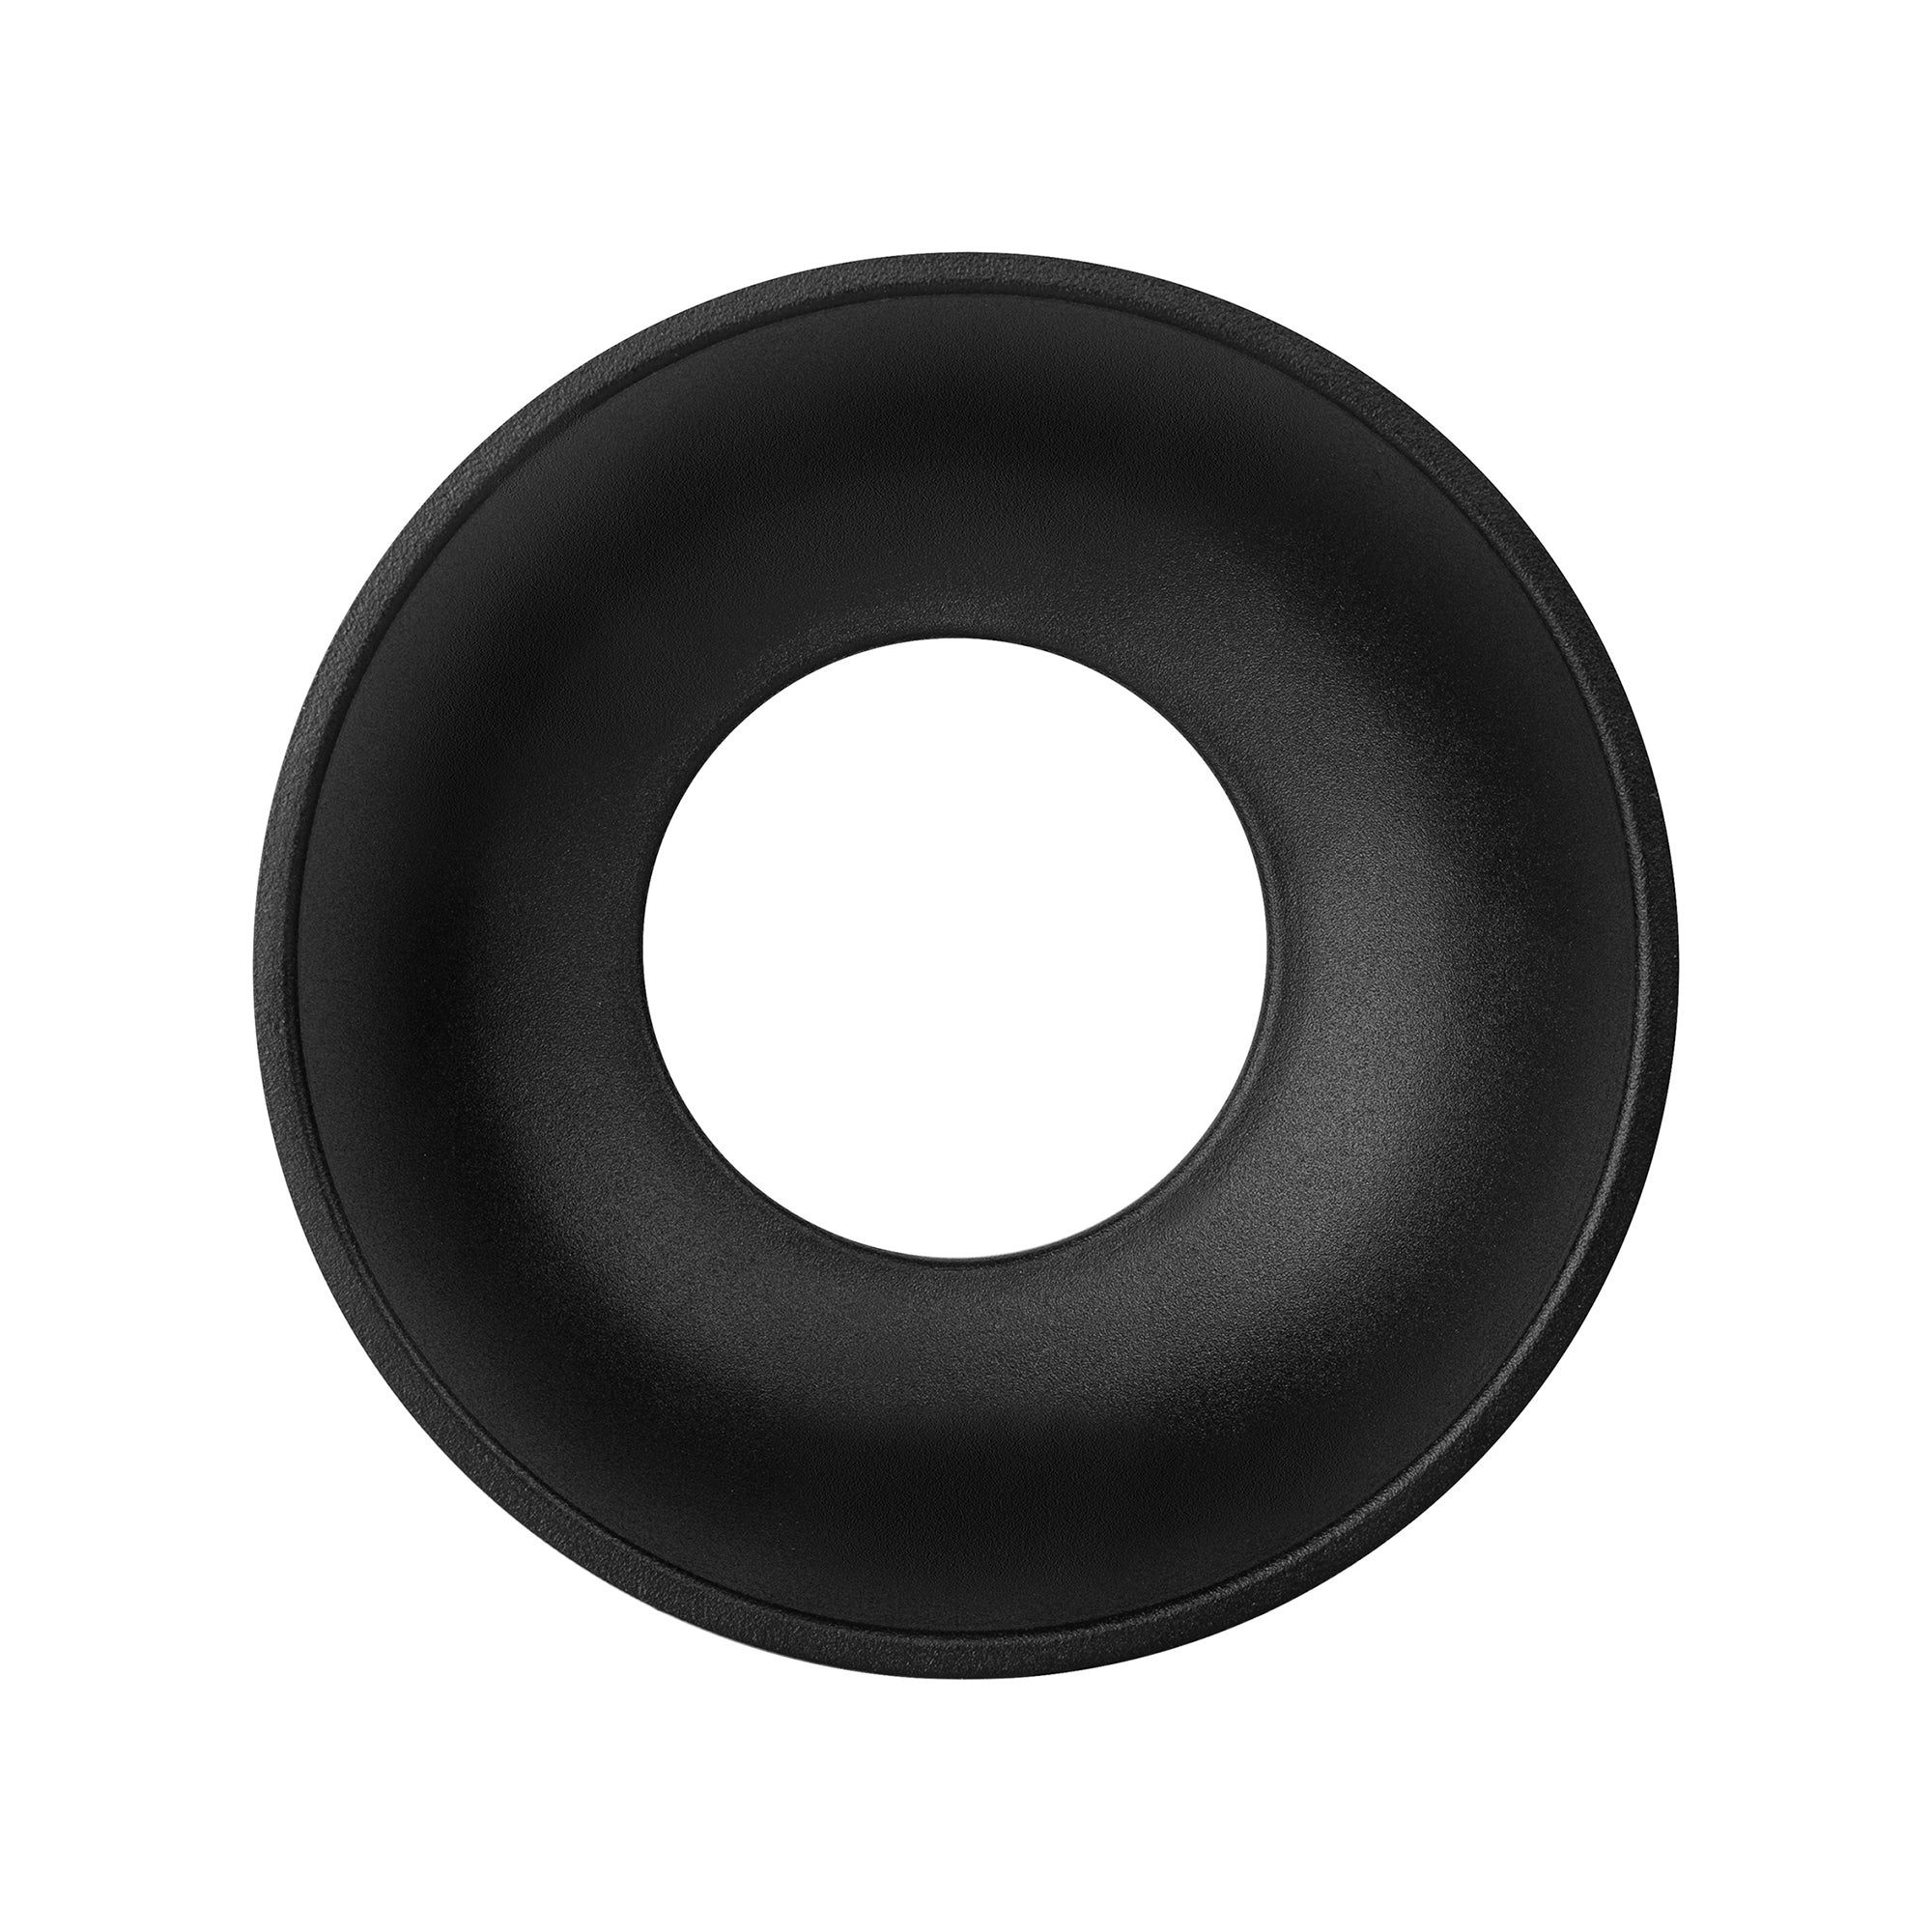 HV5843-BR - Black Inner Ring to Suit HV5843 18w Surface Mounted LED Downlight